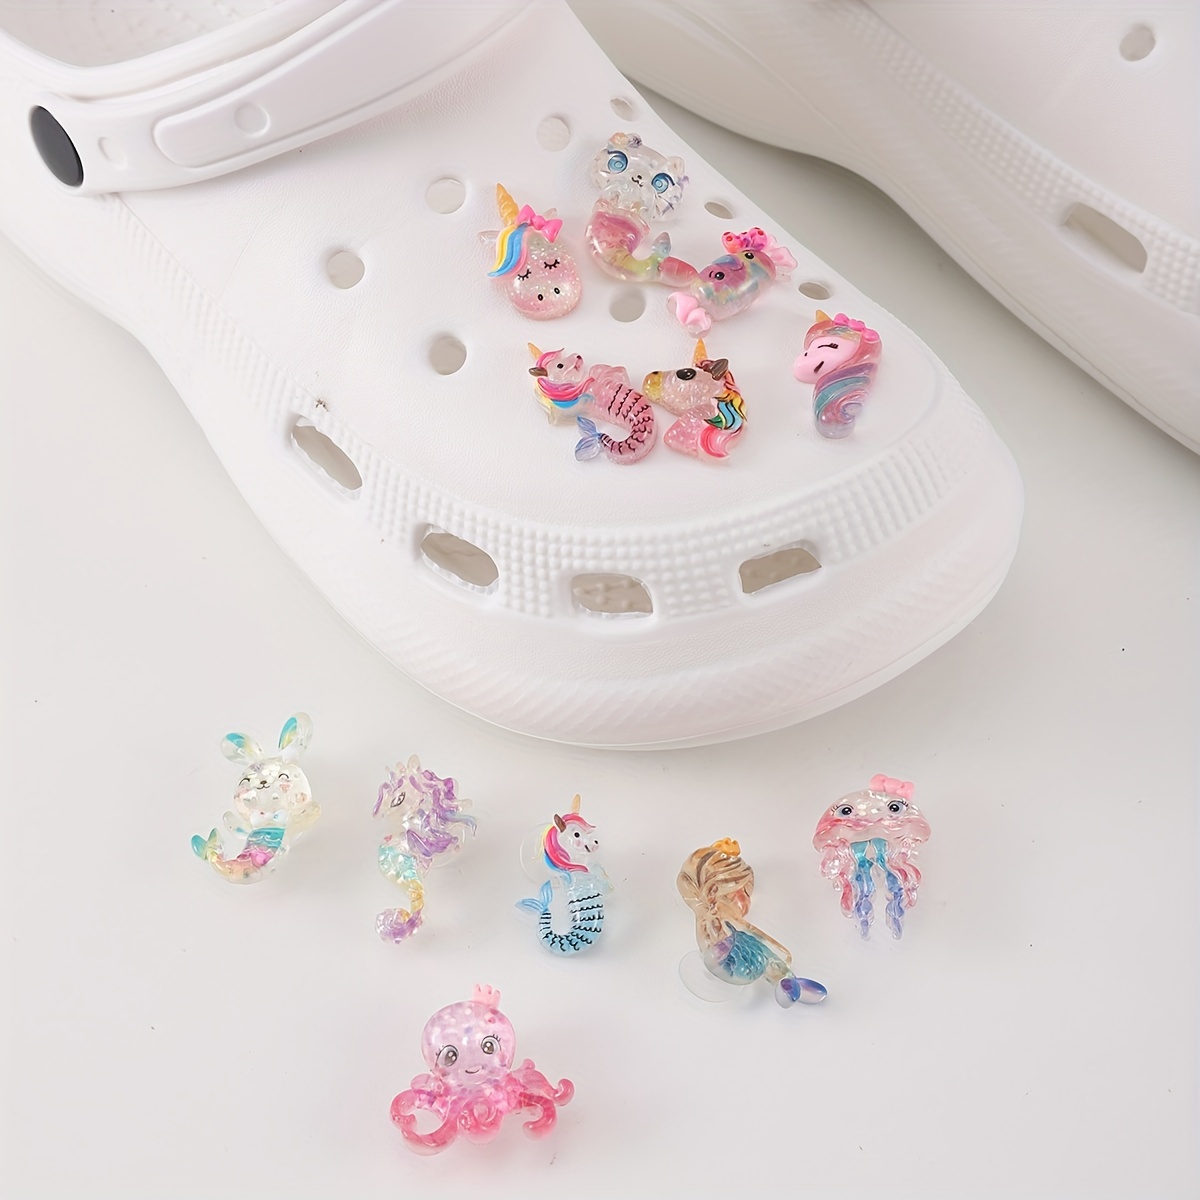 

12pcs Blue & Pink Ocean Series Shoes Charms For Clogs Sandals Decoration, Shoes Diy Accessories